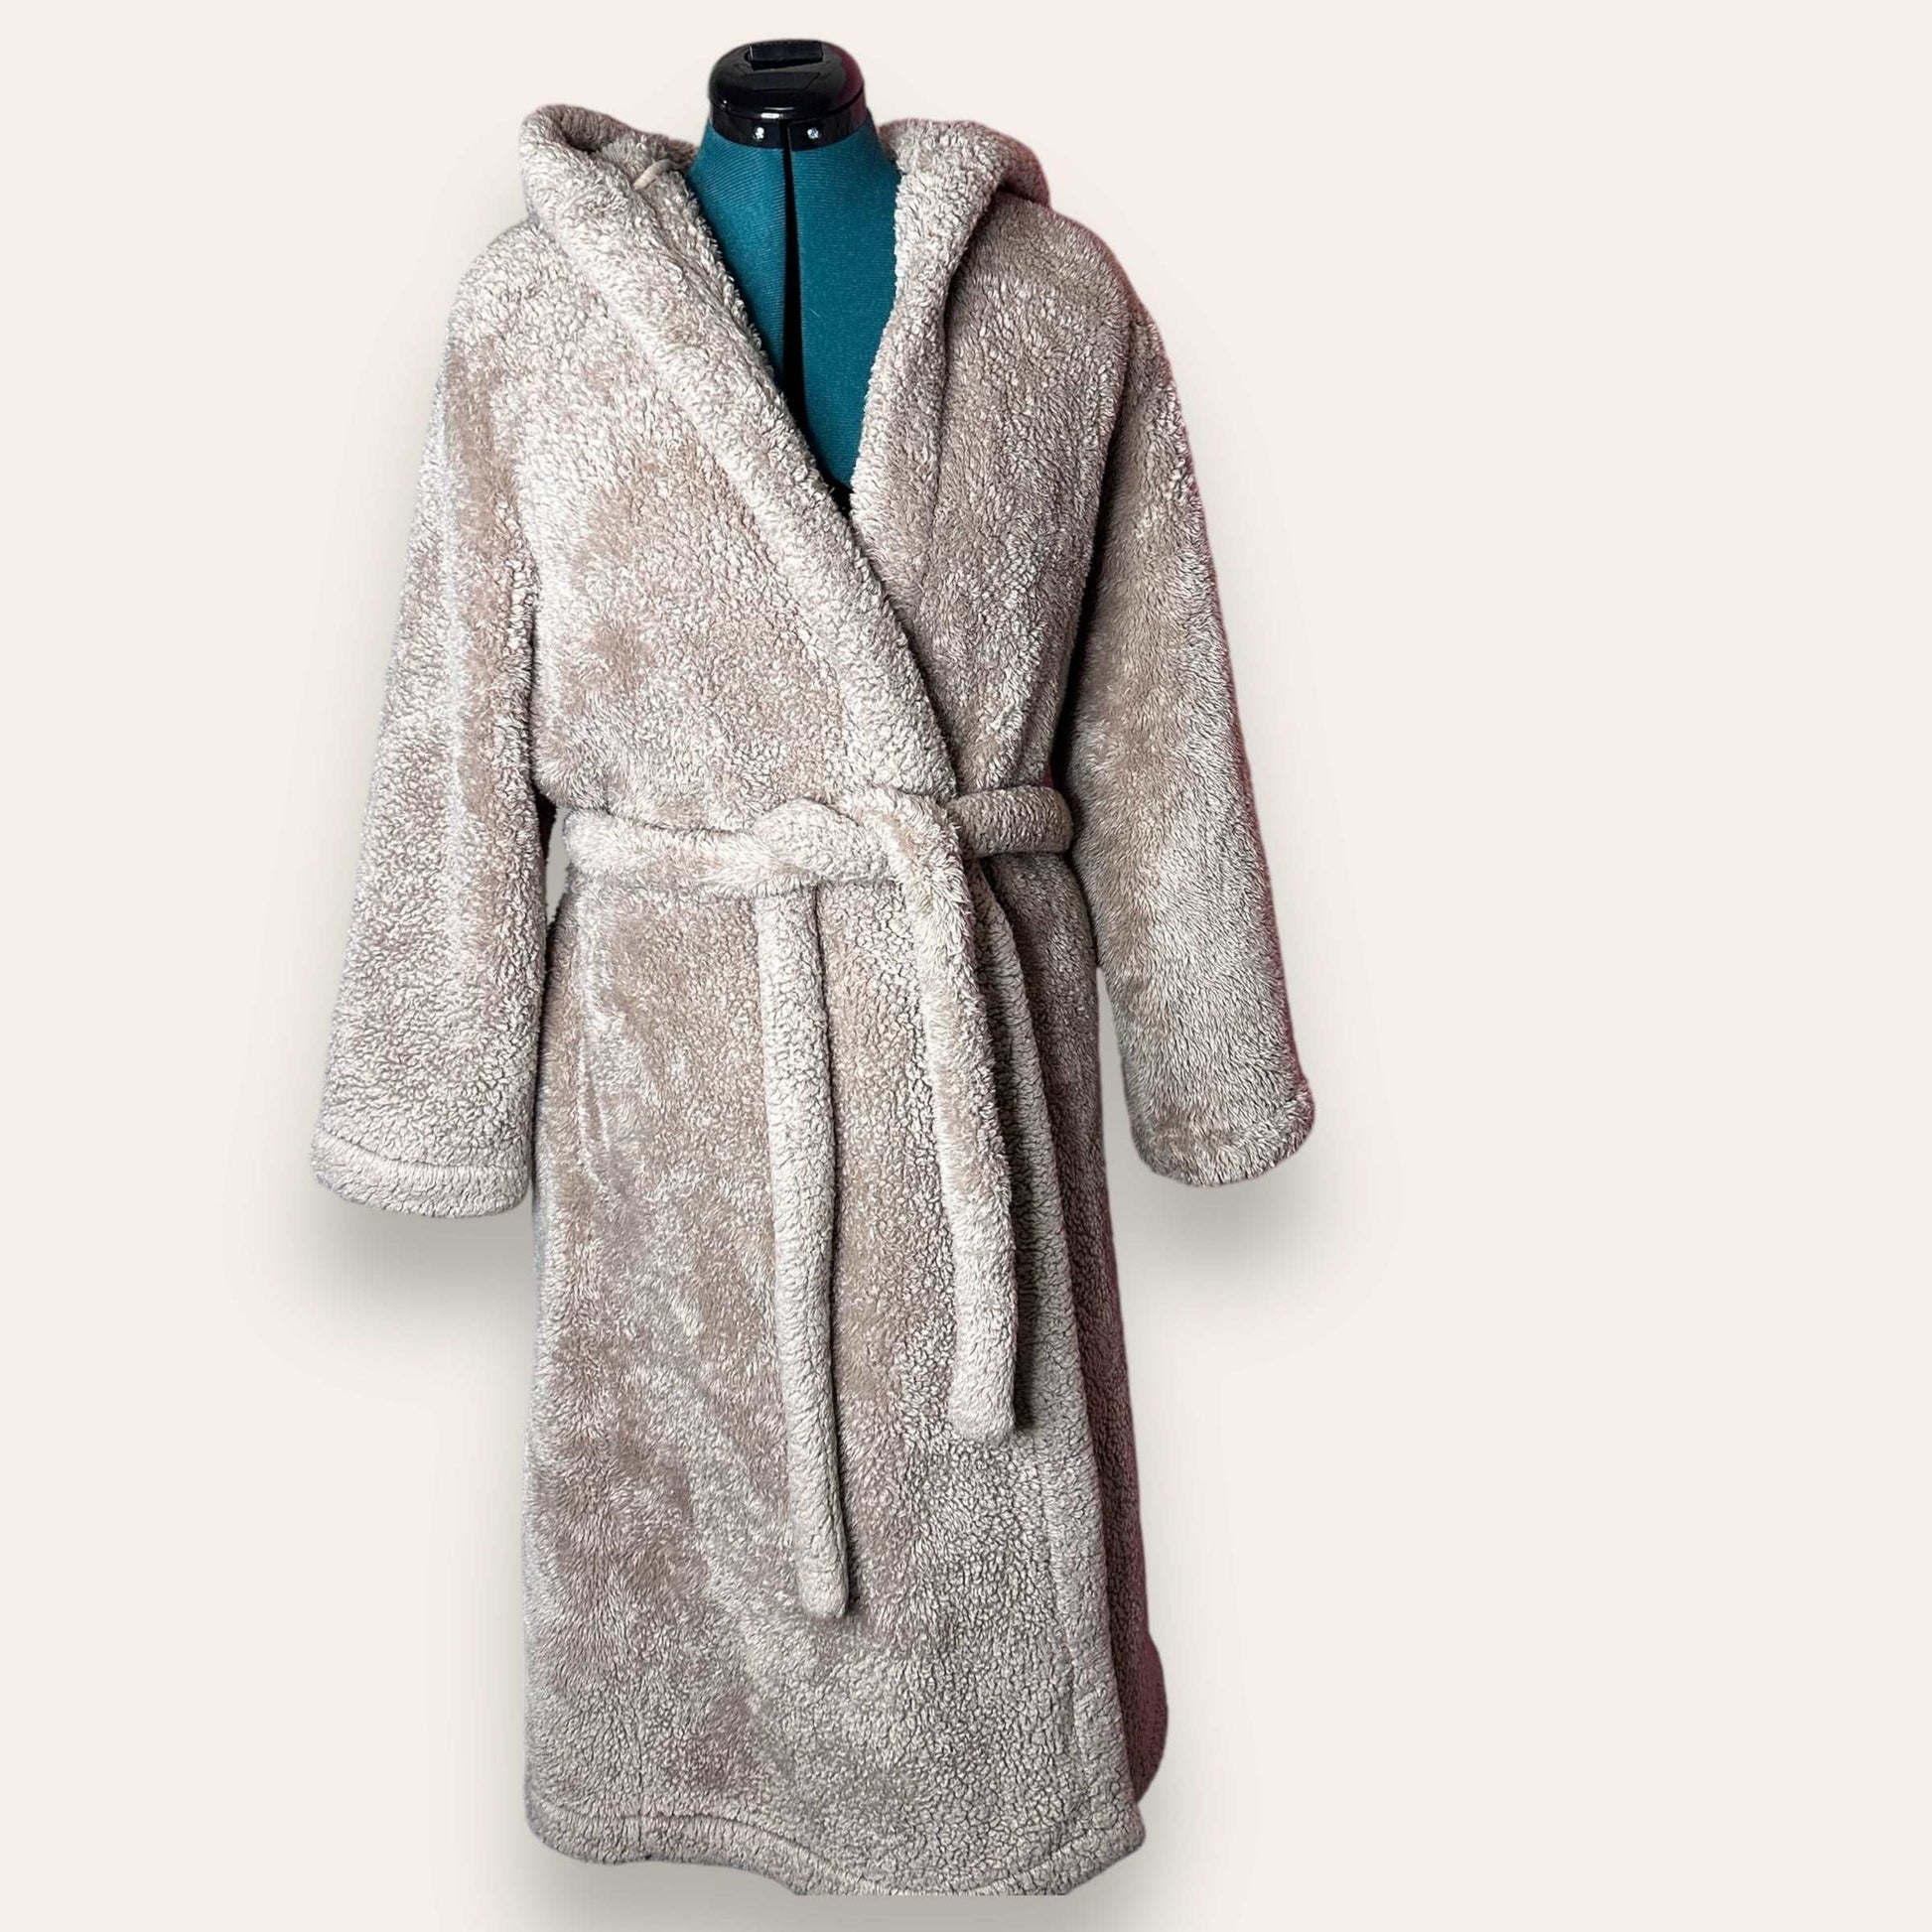 Skin Wynter Plush Robe in Portobello M